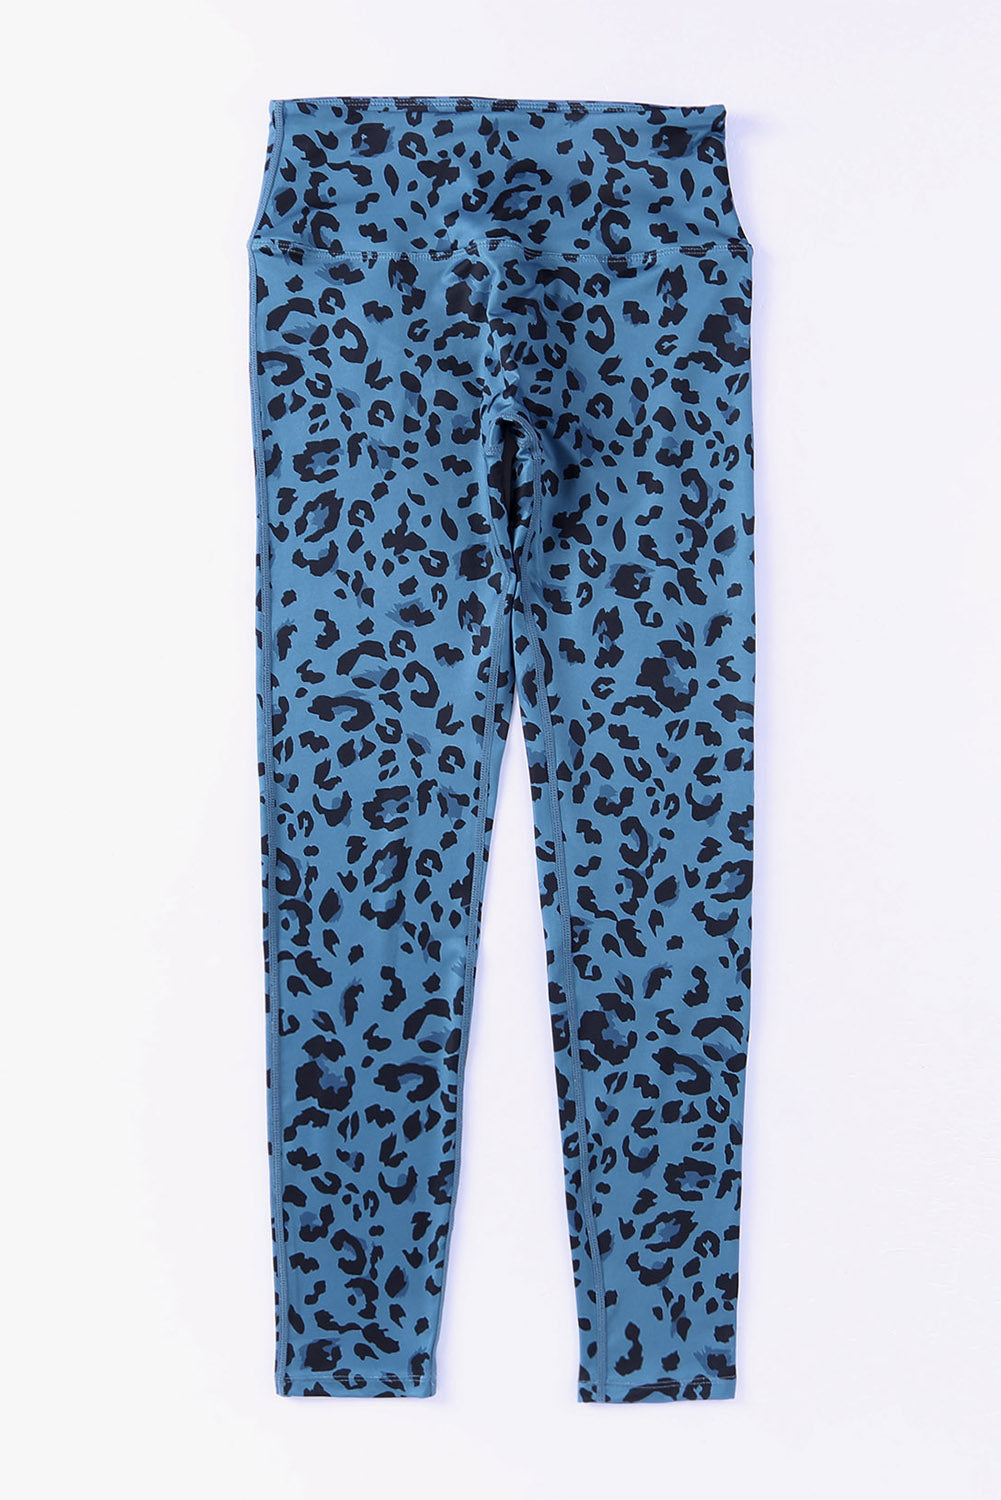 Leopard Print Wide Waistband Leggings - Women’s Clothing & Accessories - Pants - 8 - 2024